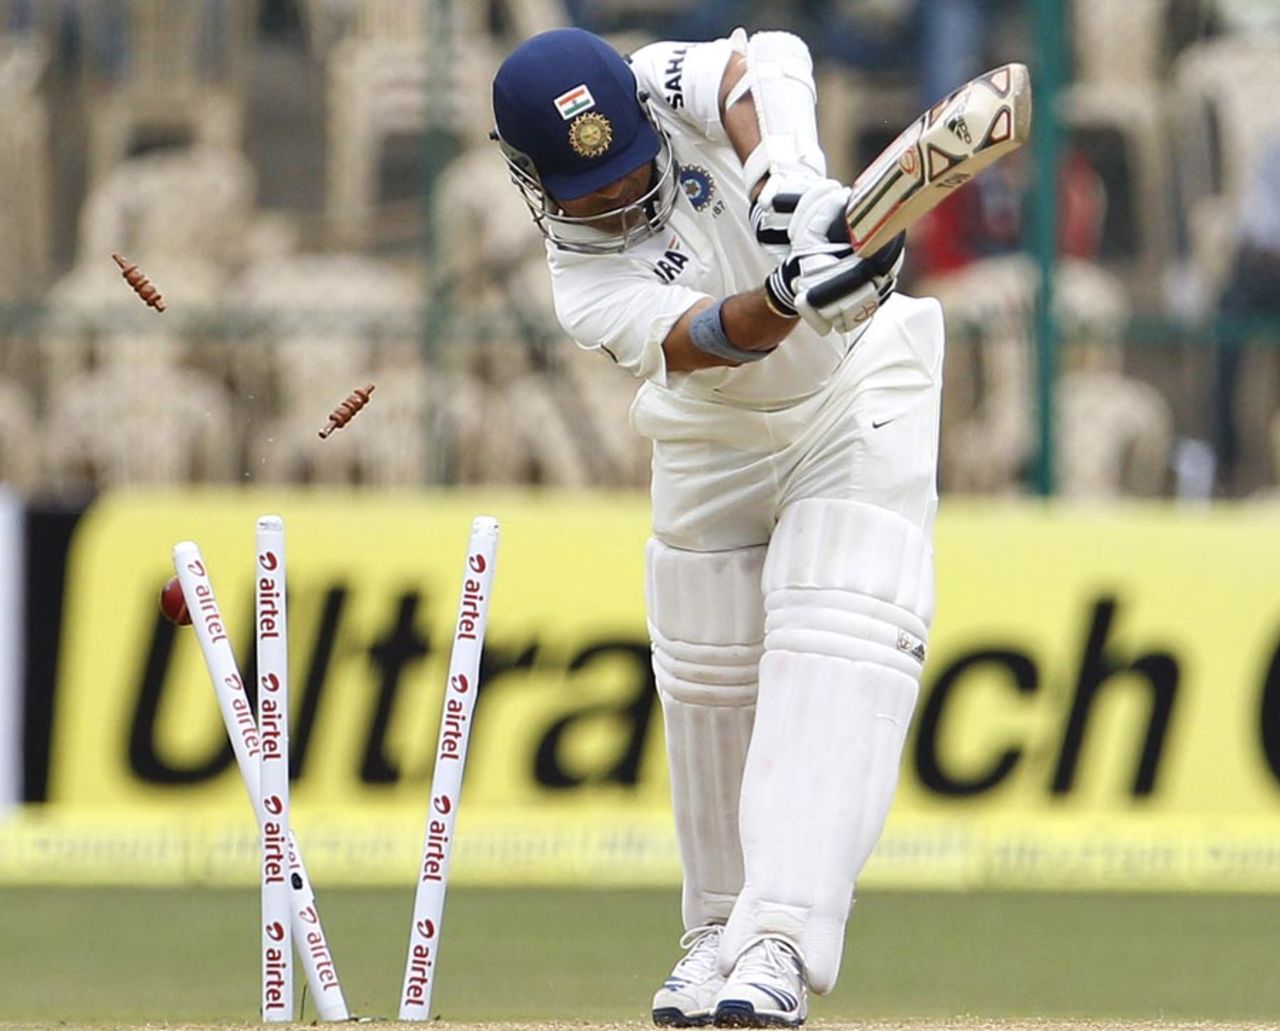 Sachin Tendulkar missed a straight ball, India v New Zealand, 2nd Test, Bangalore, 2nd day, September 1, 2012